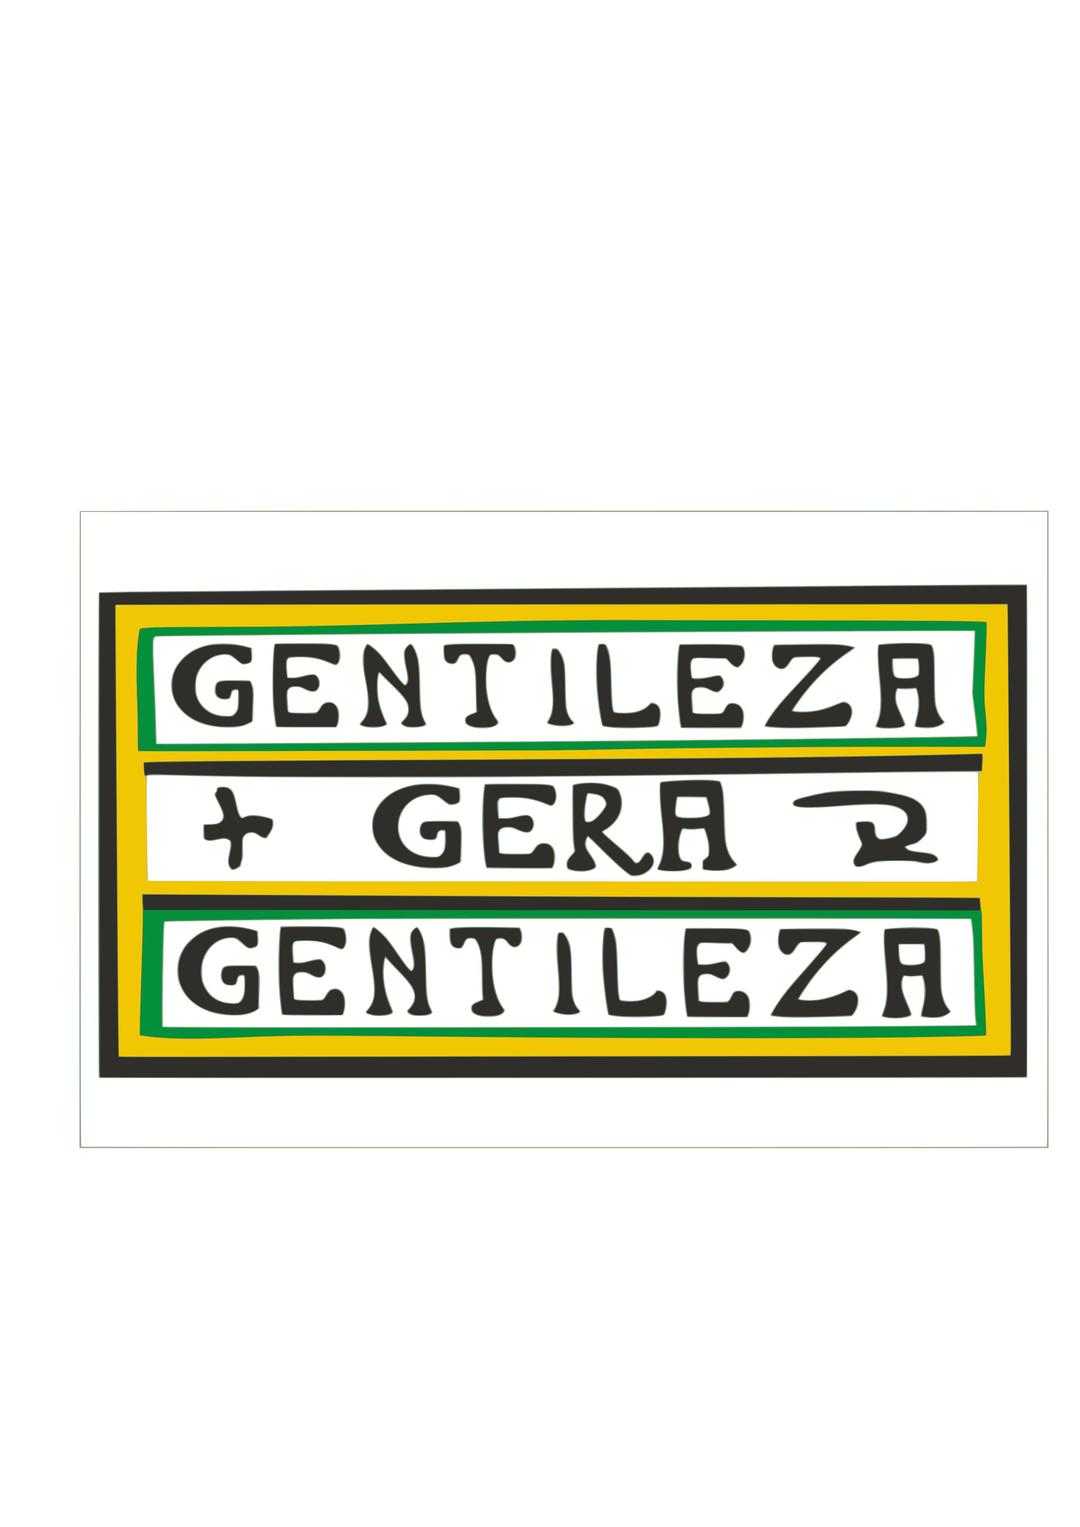 Gentileza-wall writing-02 png transparent